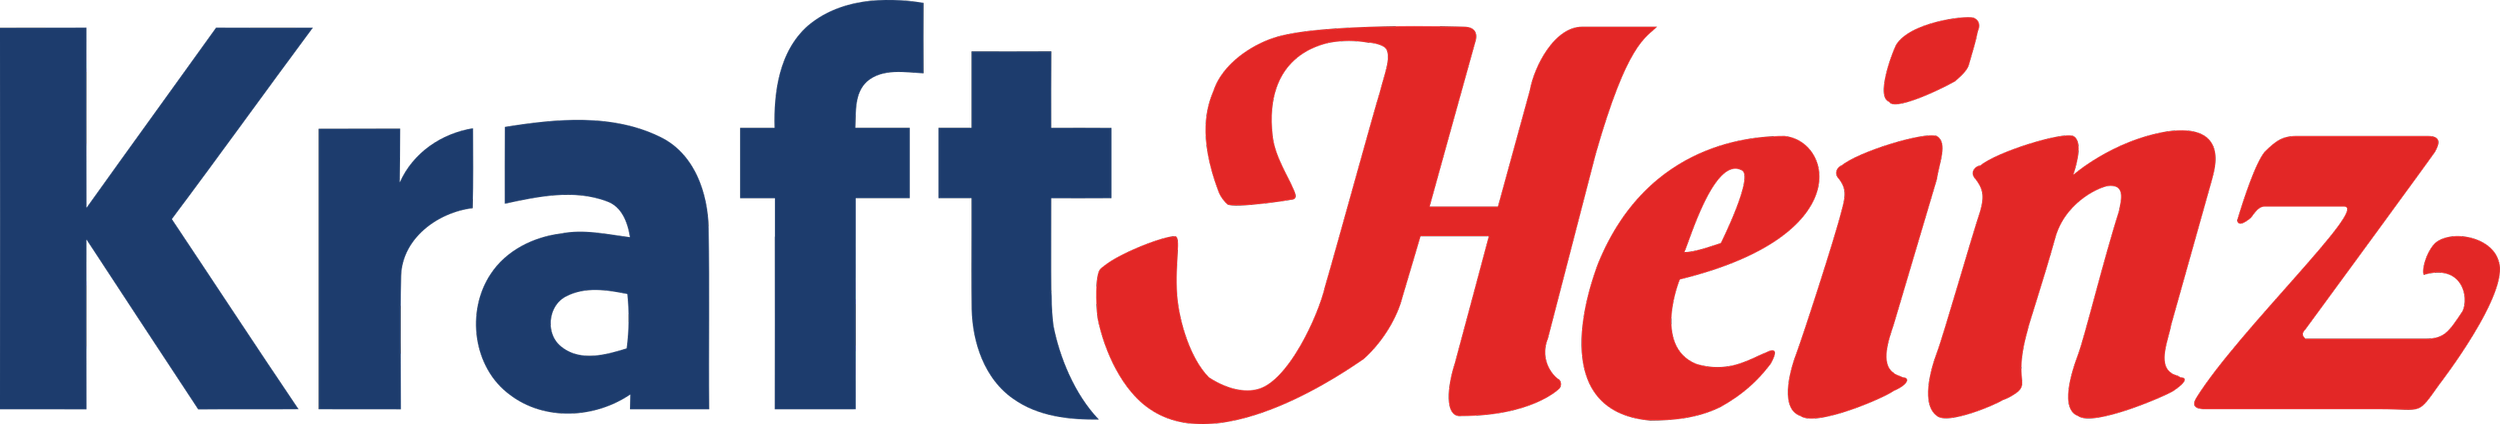 kraft-heinz-logo.png